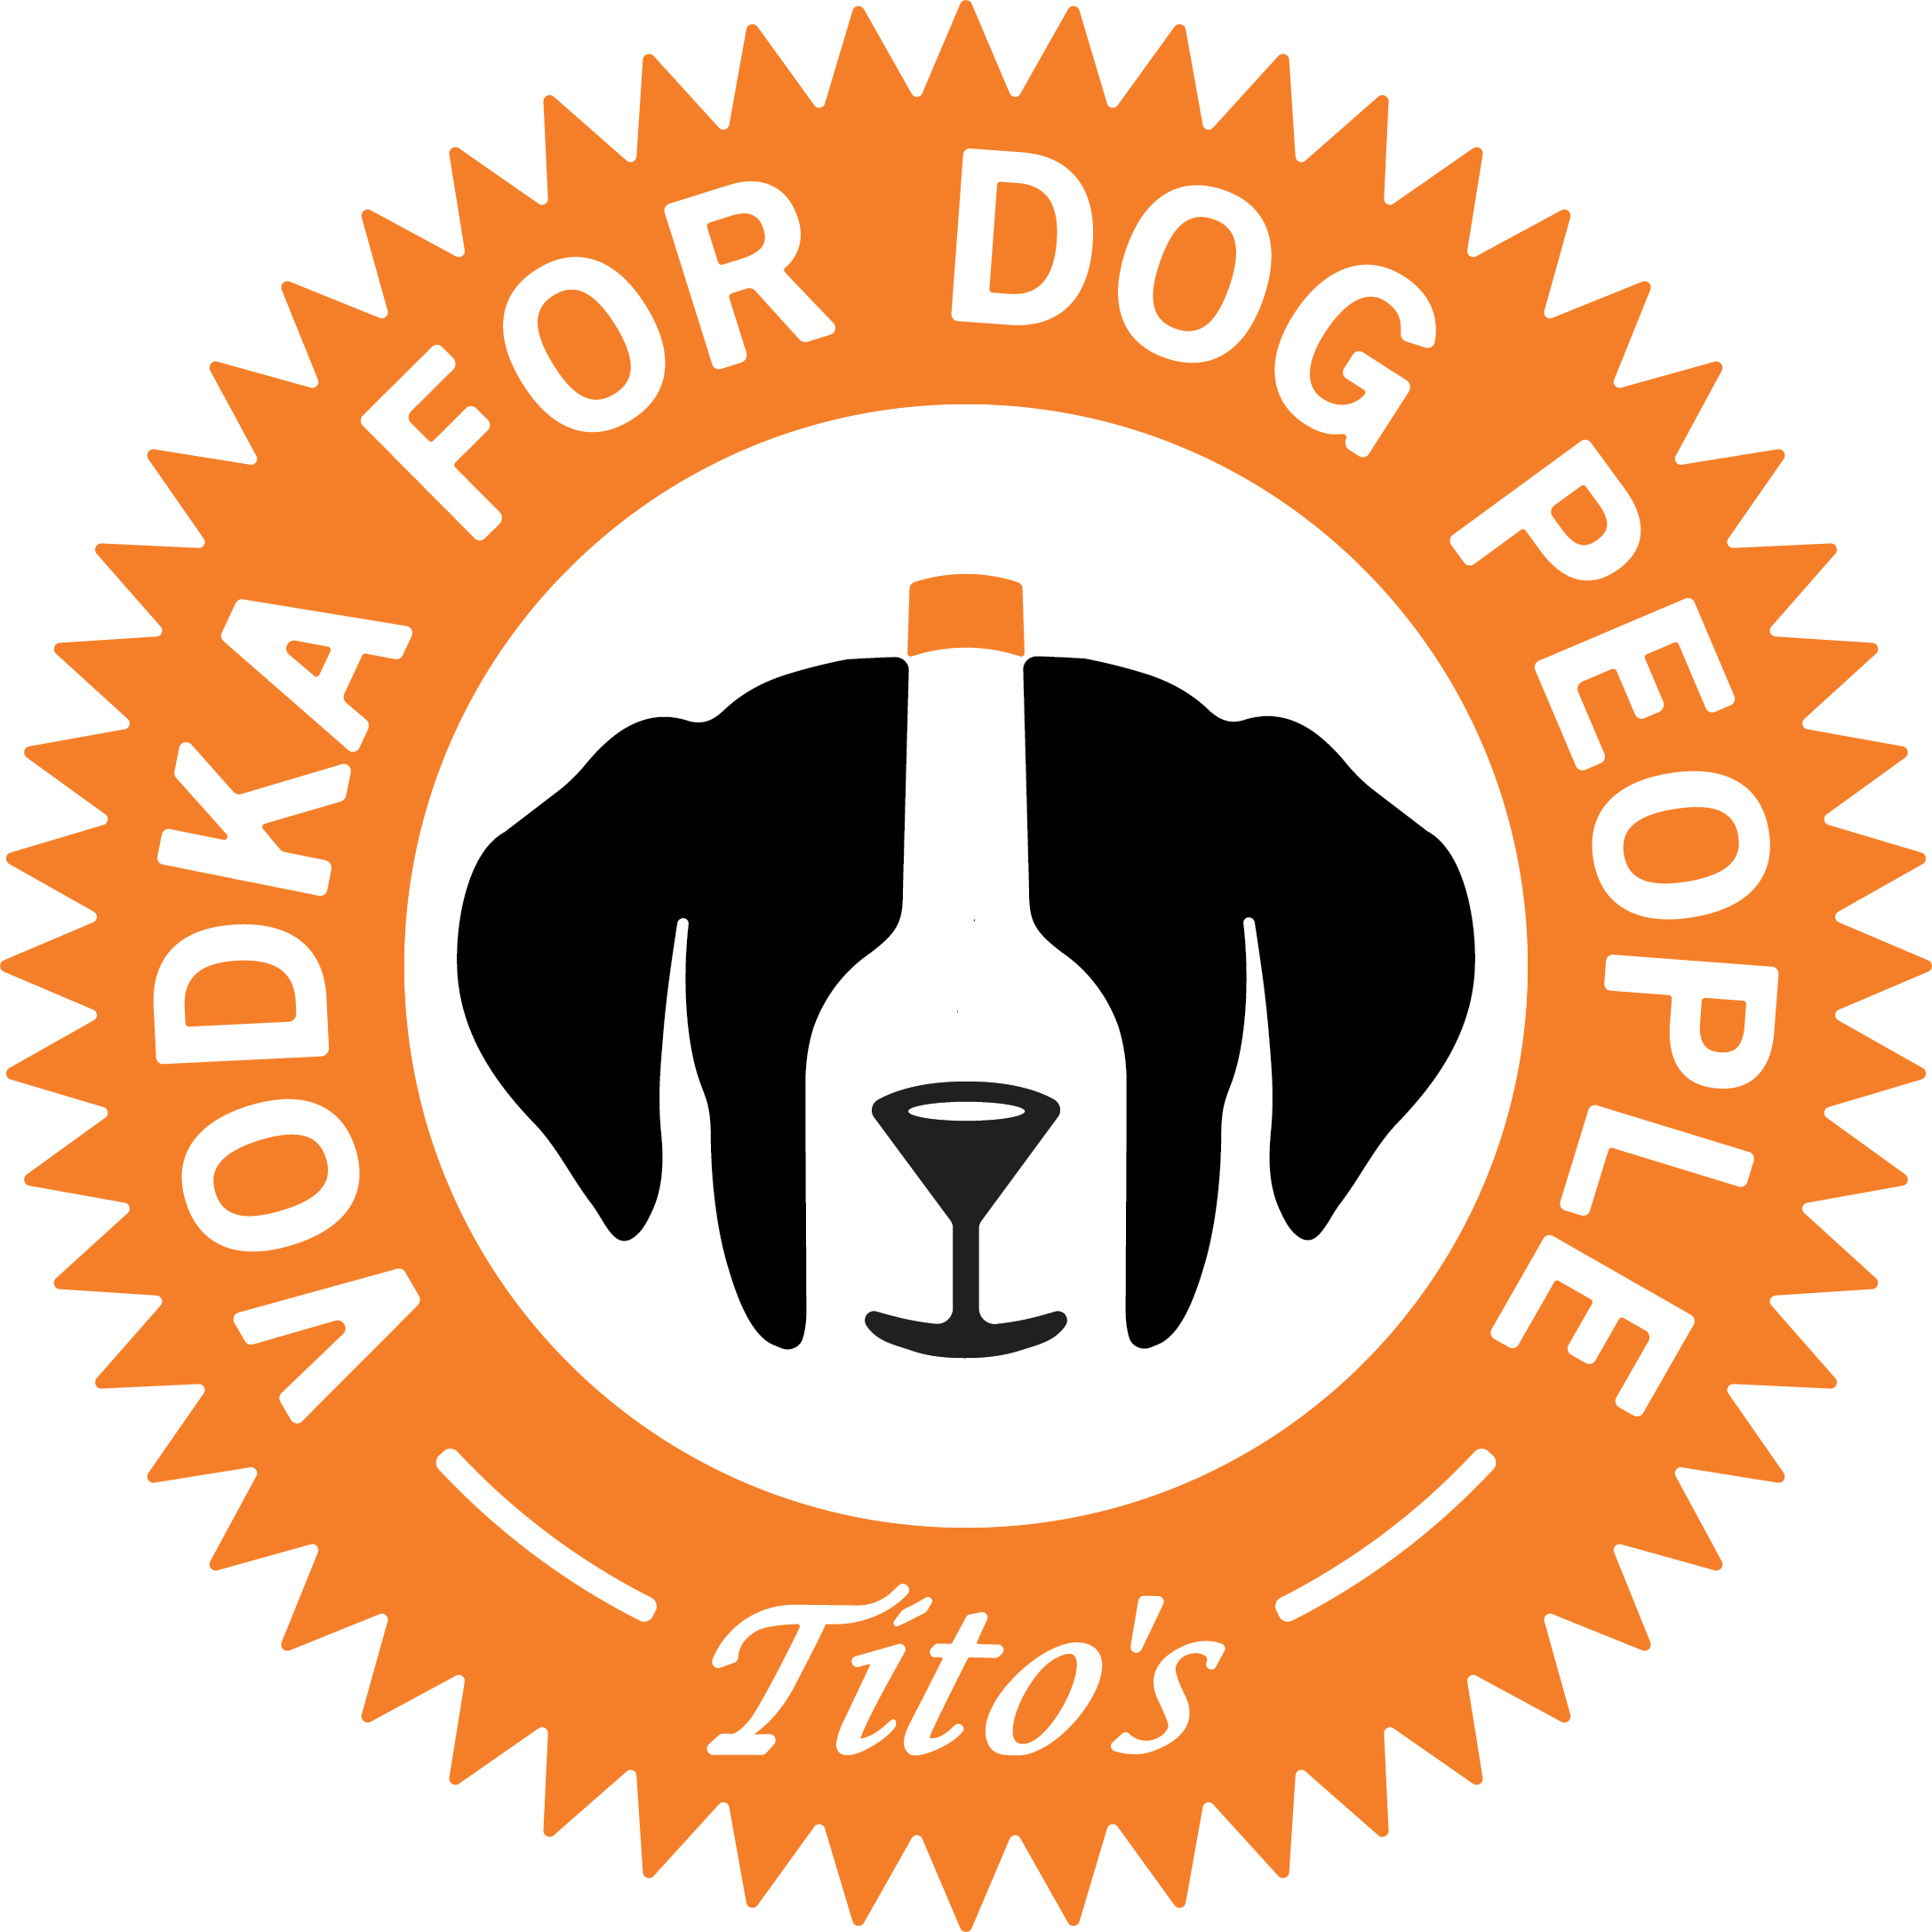 Tito’s Handmade Vodka | Vodka for Dog People